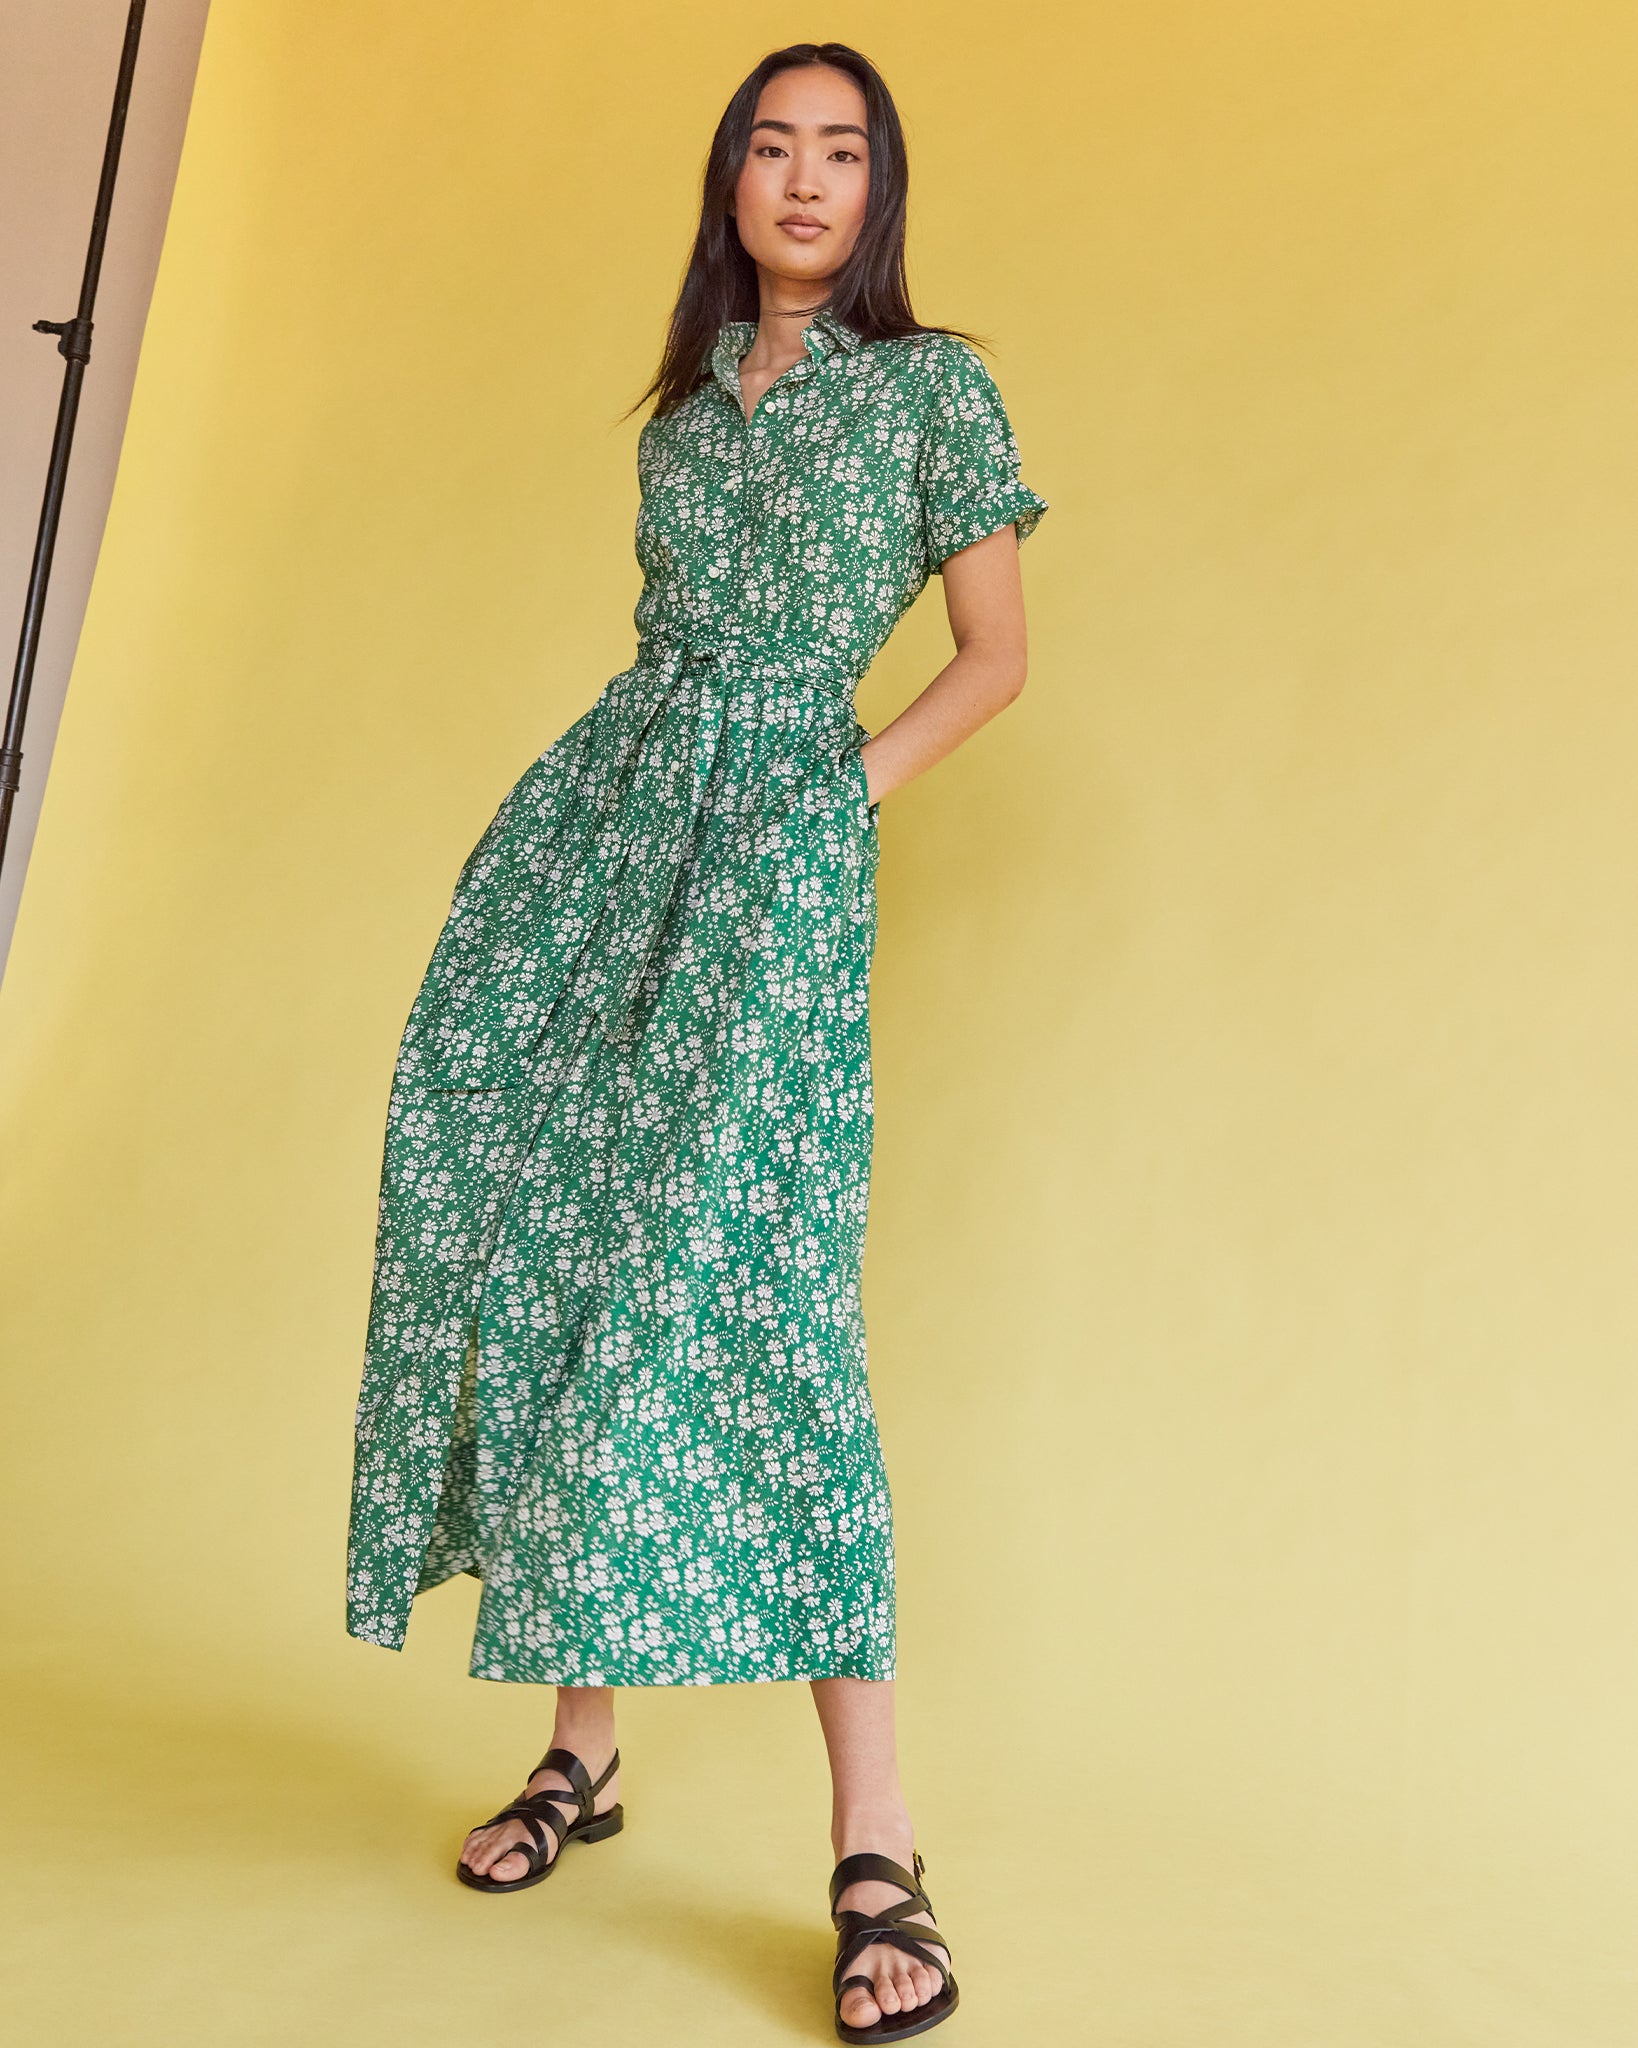 Short-Sleeved Classic Shirtwaist Maxi Dress in Green Capel Liberty Fabric